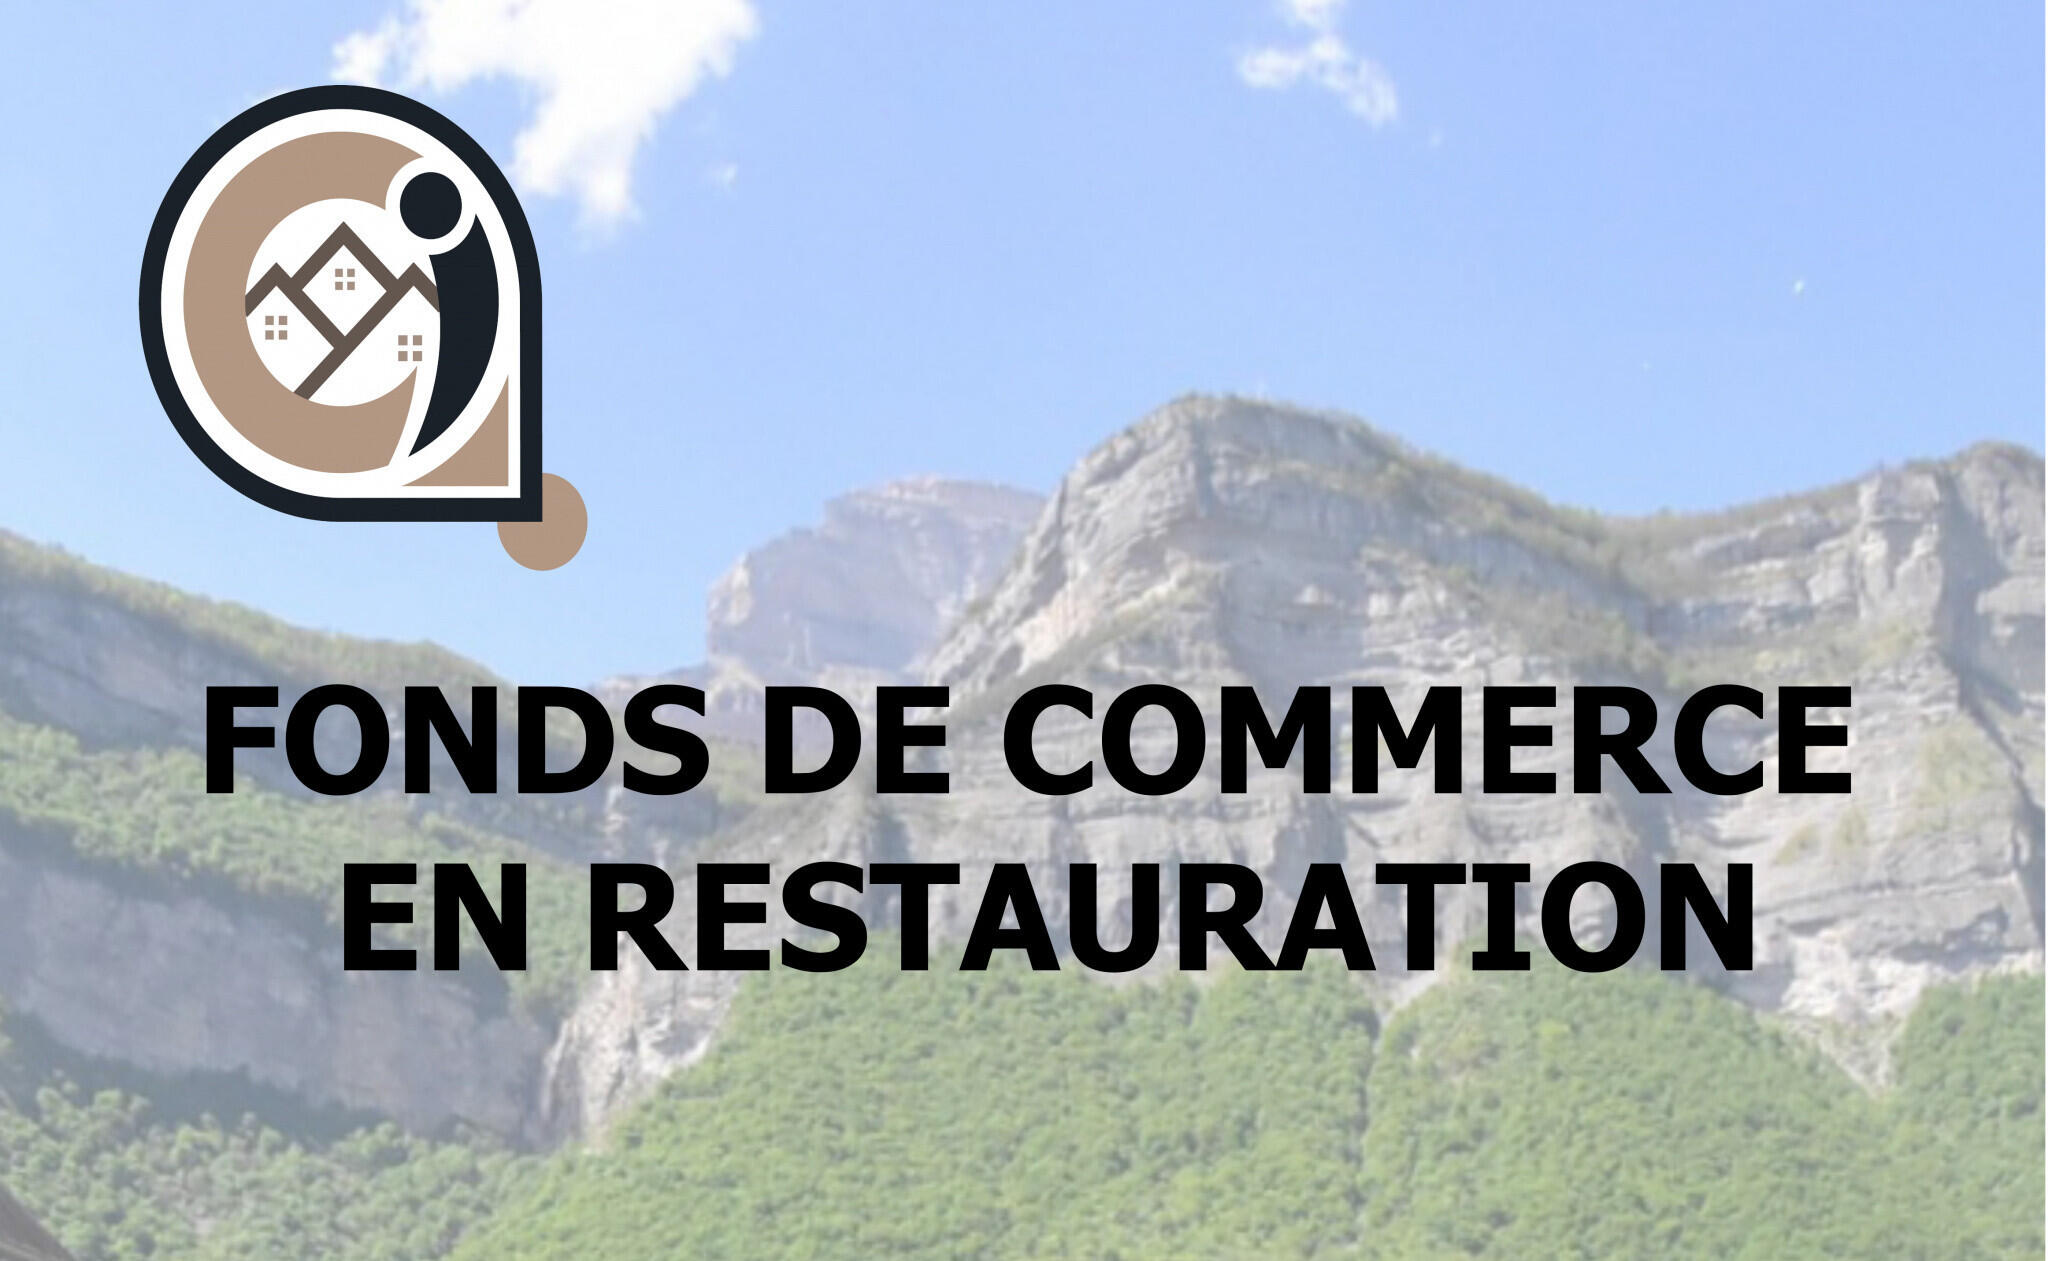 Vente restaurant en vallée du Grésivaudan